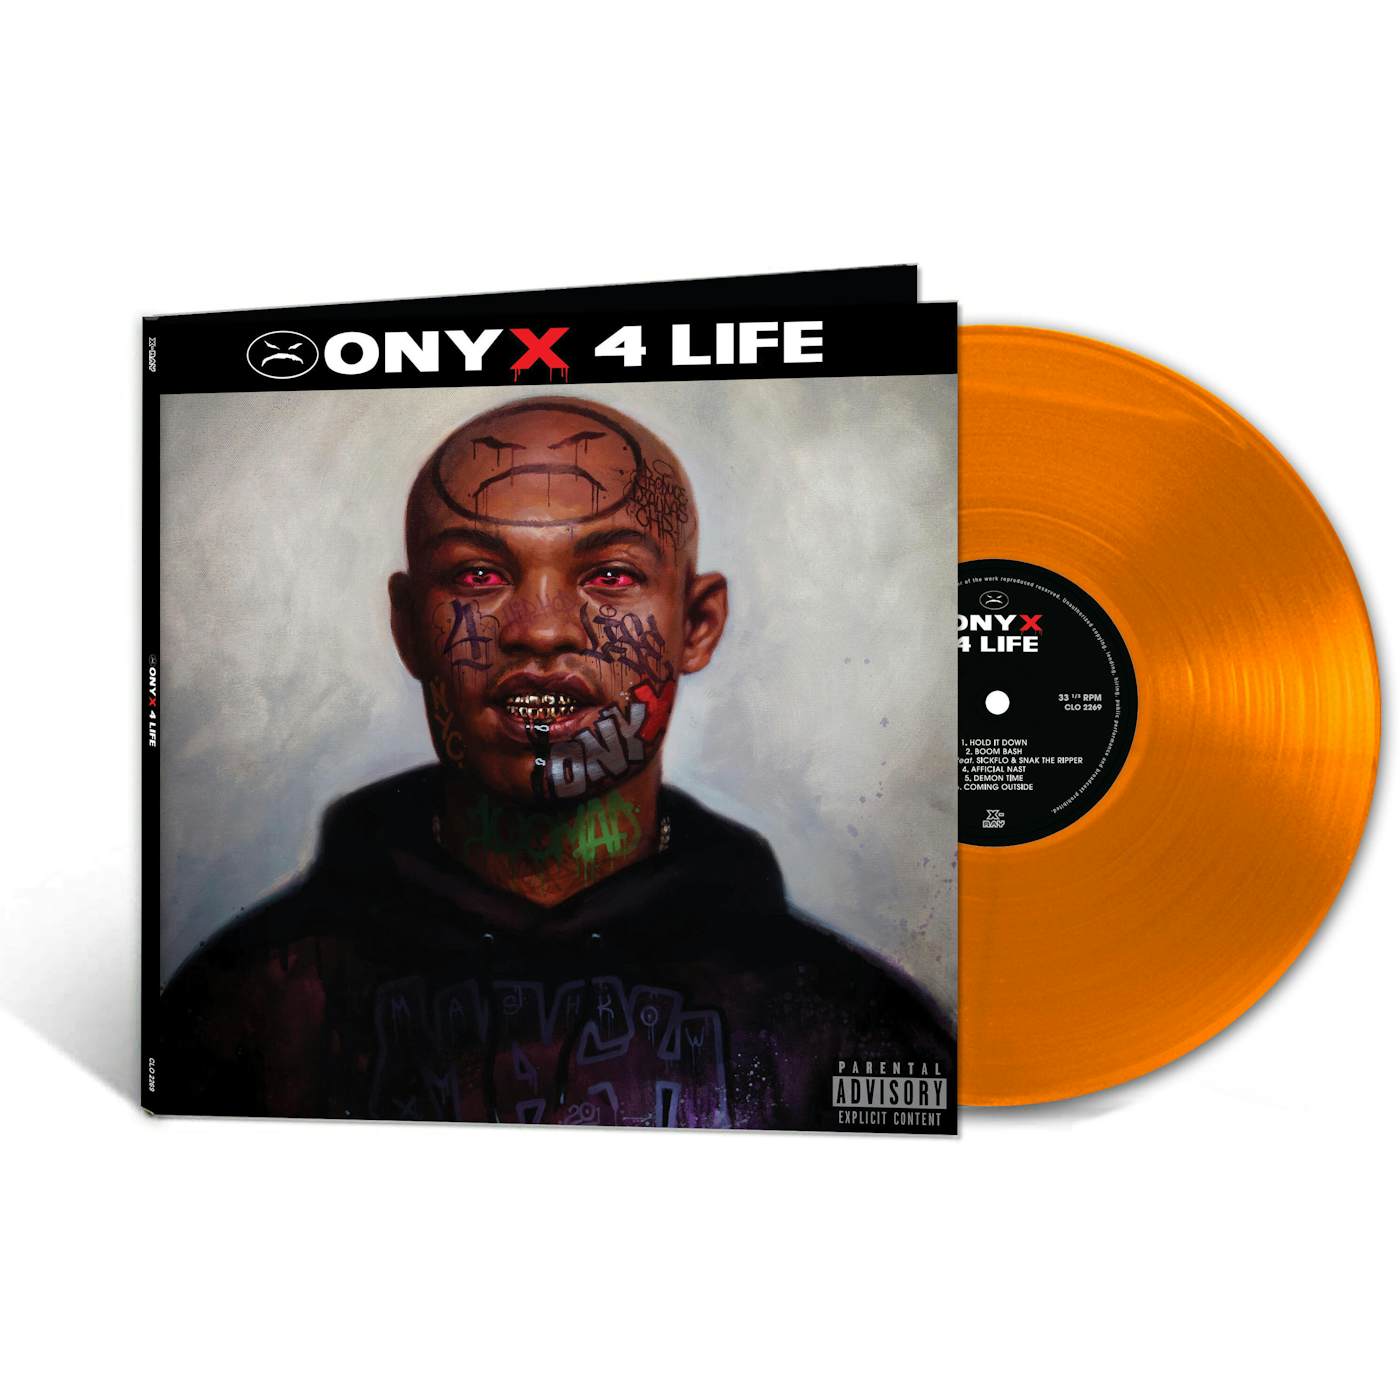 ONYX 4 LIFE Vinyl Record